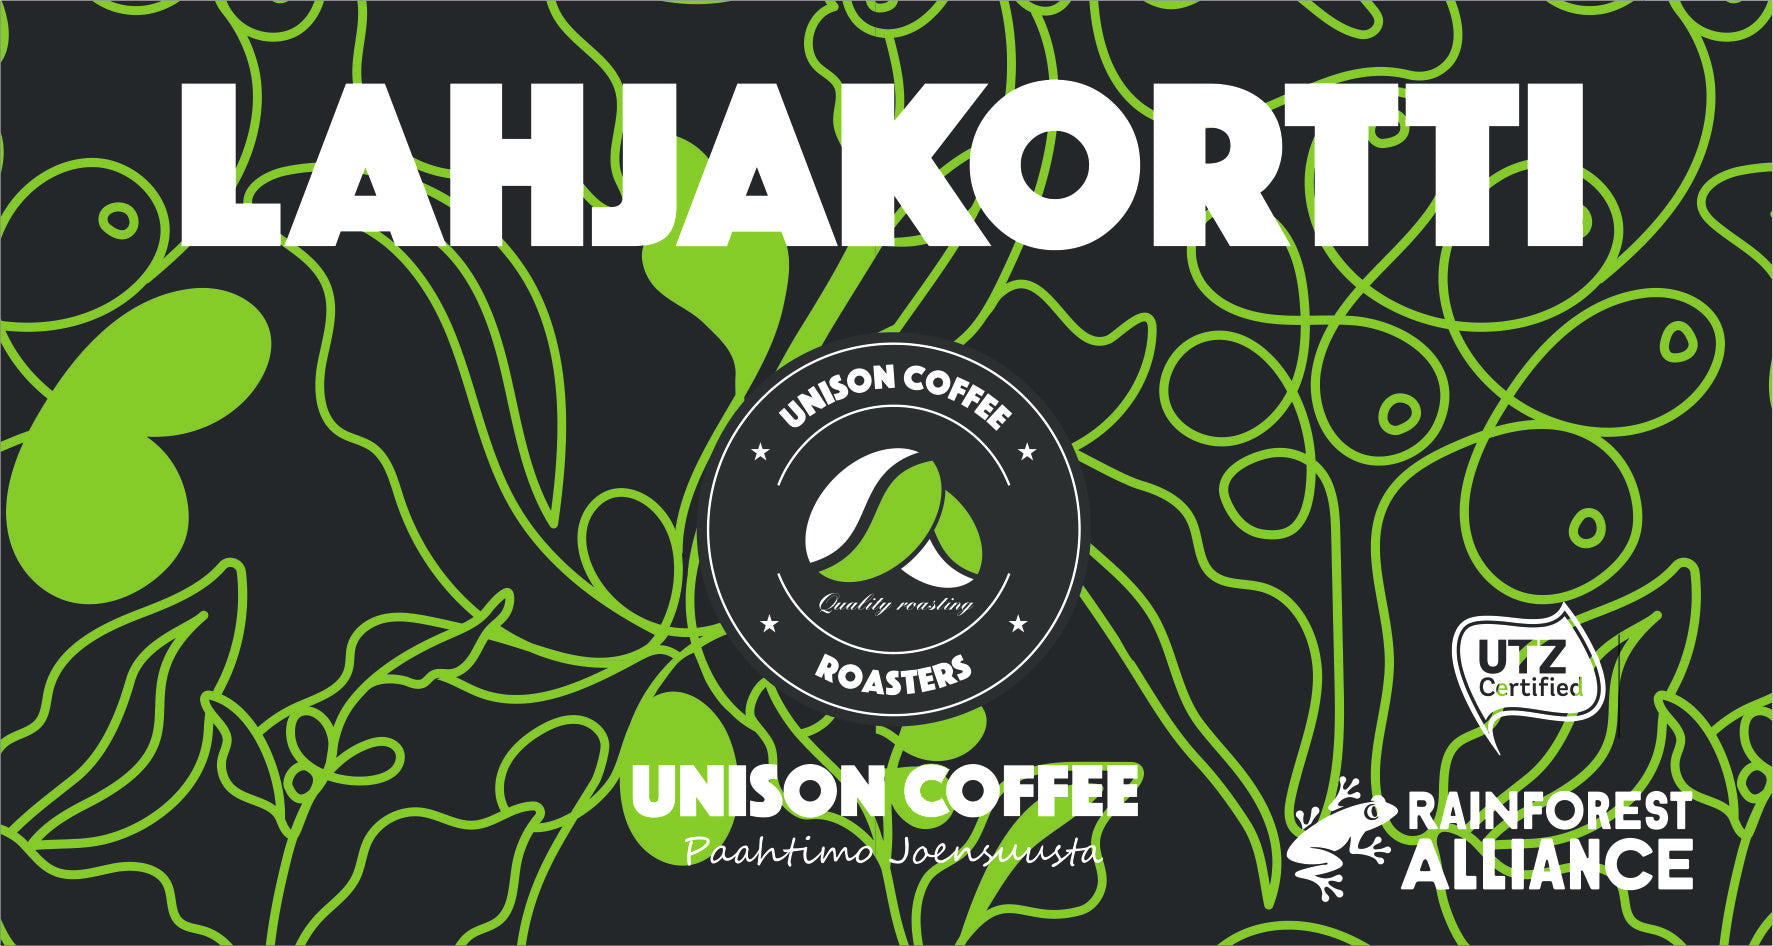 Unison Coffee digilahjakortti